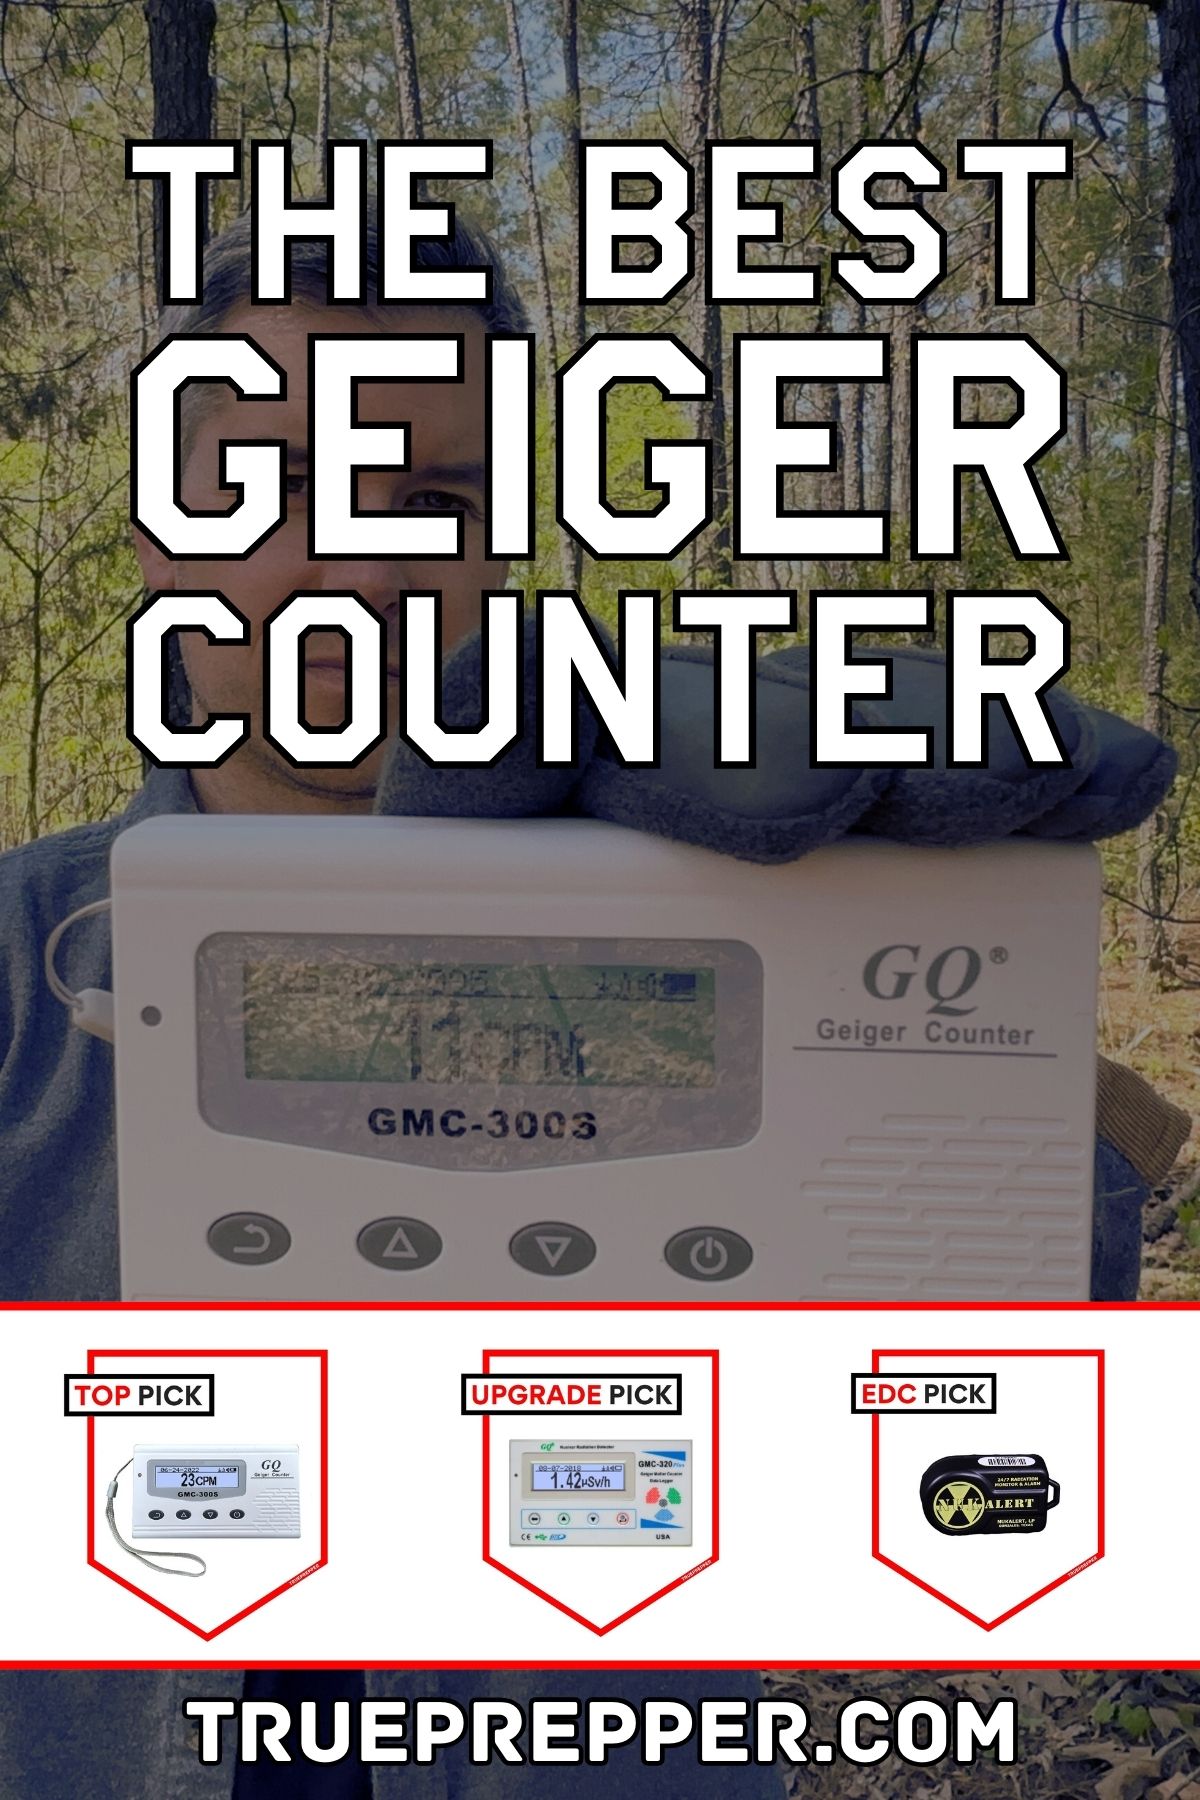 The Best Geiger Counter